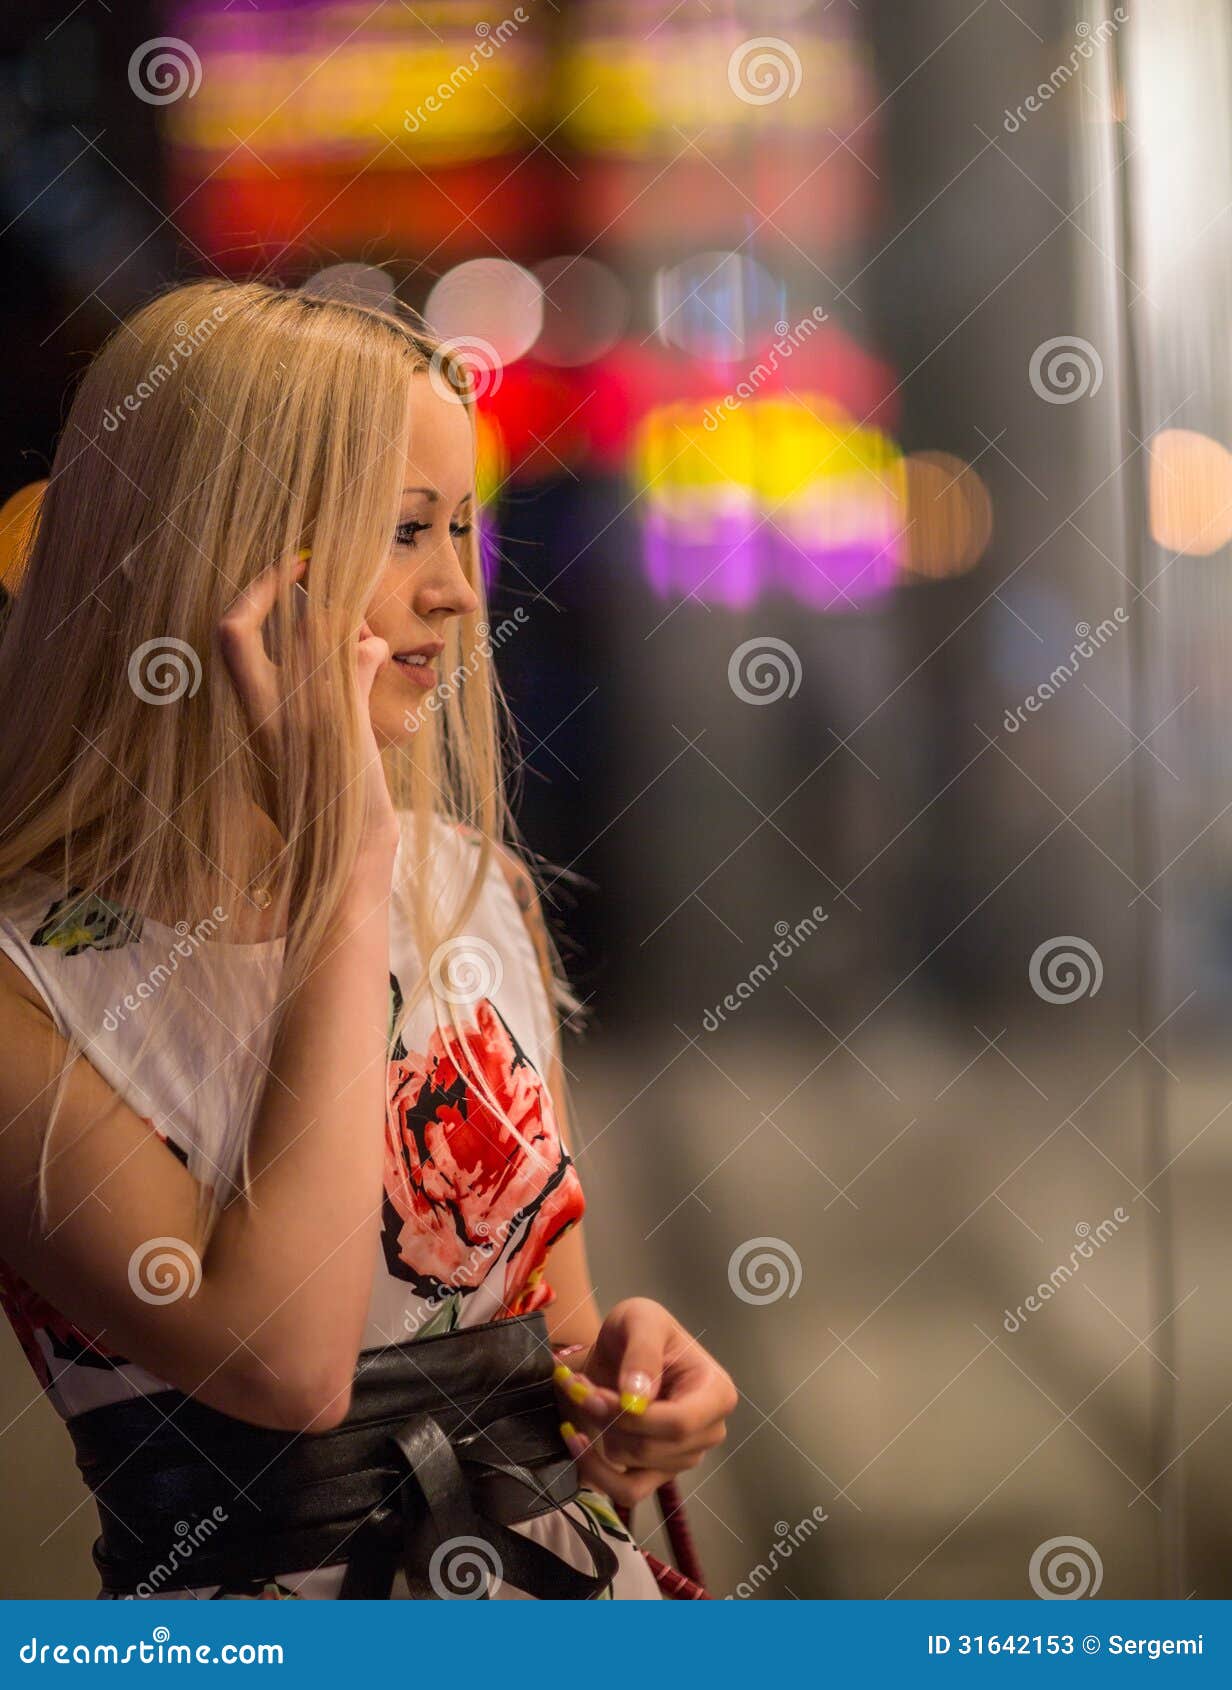 Girl Looks at Night Shopwindow Stock Image - Image of fashion, choosing ...